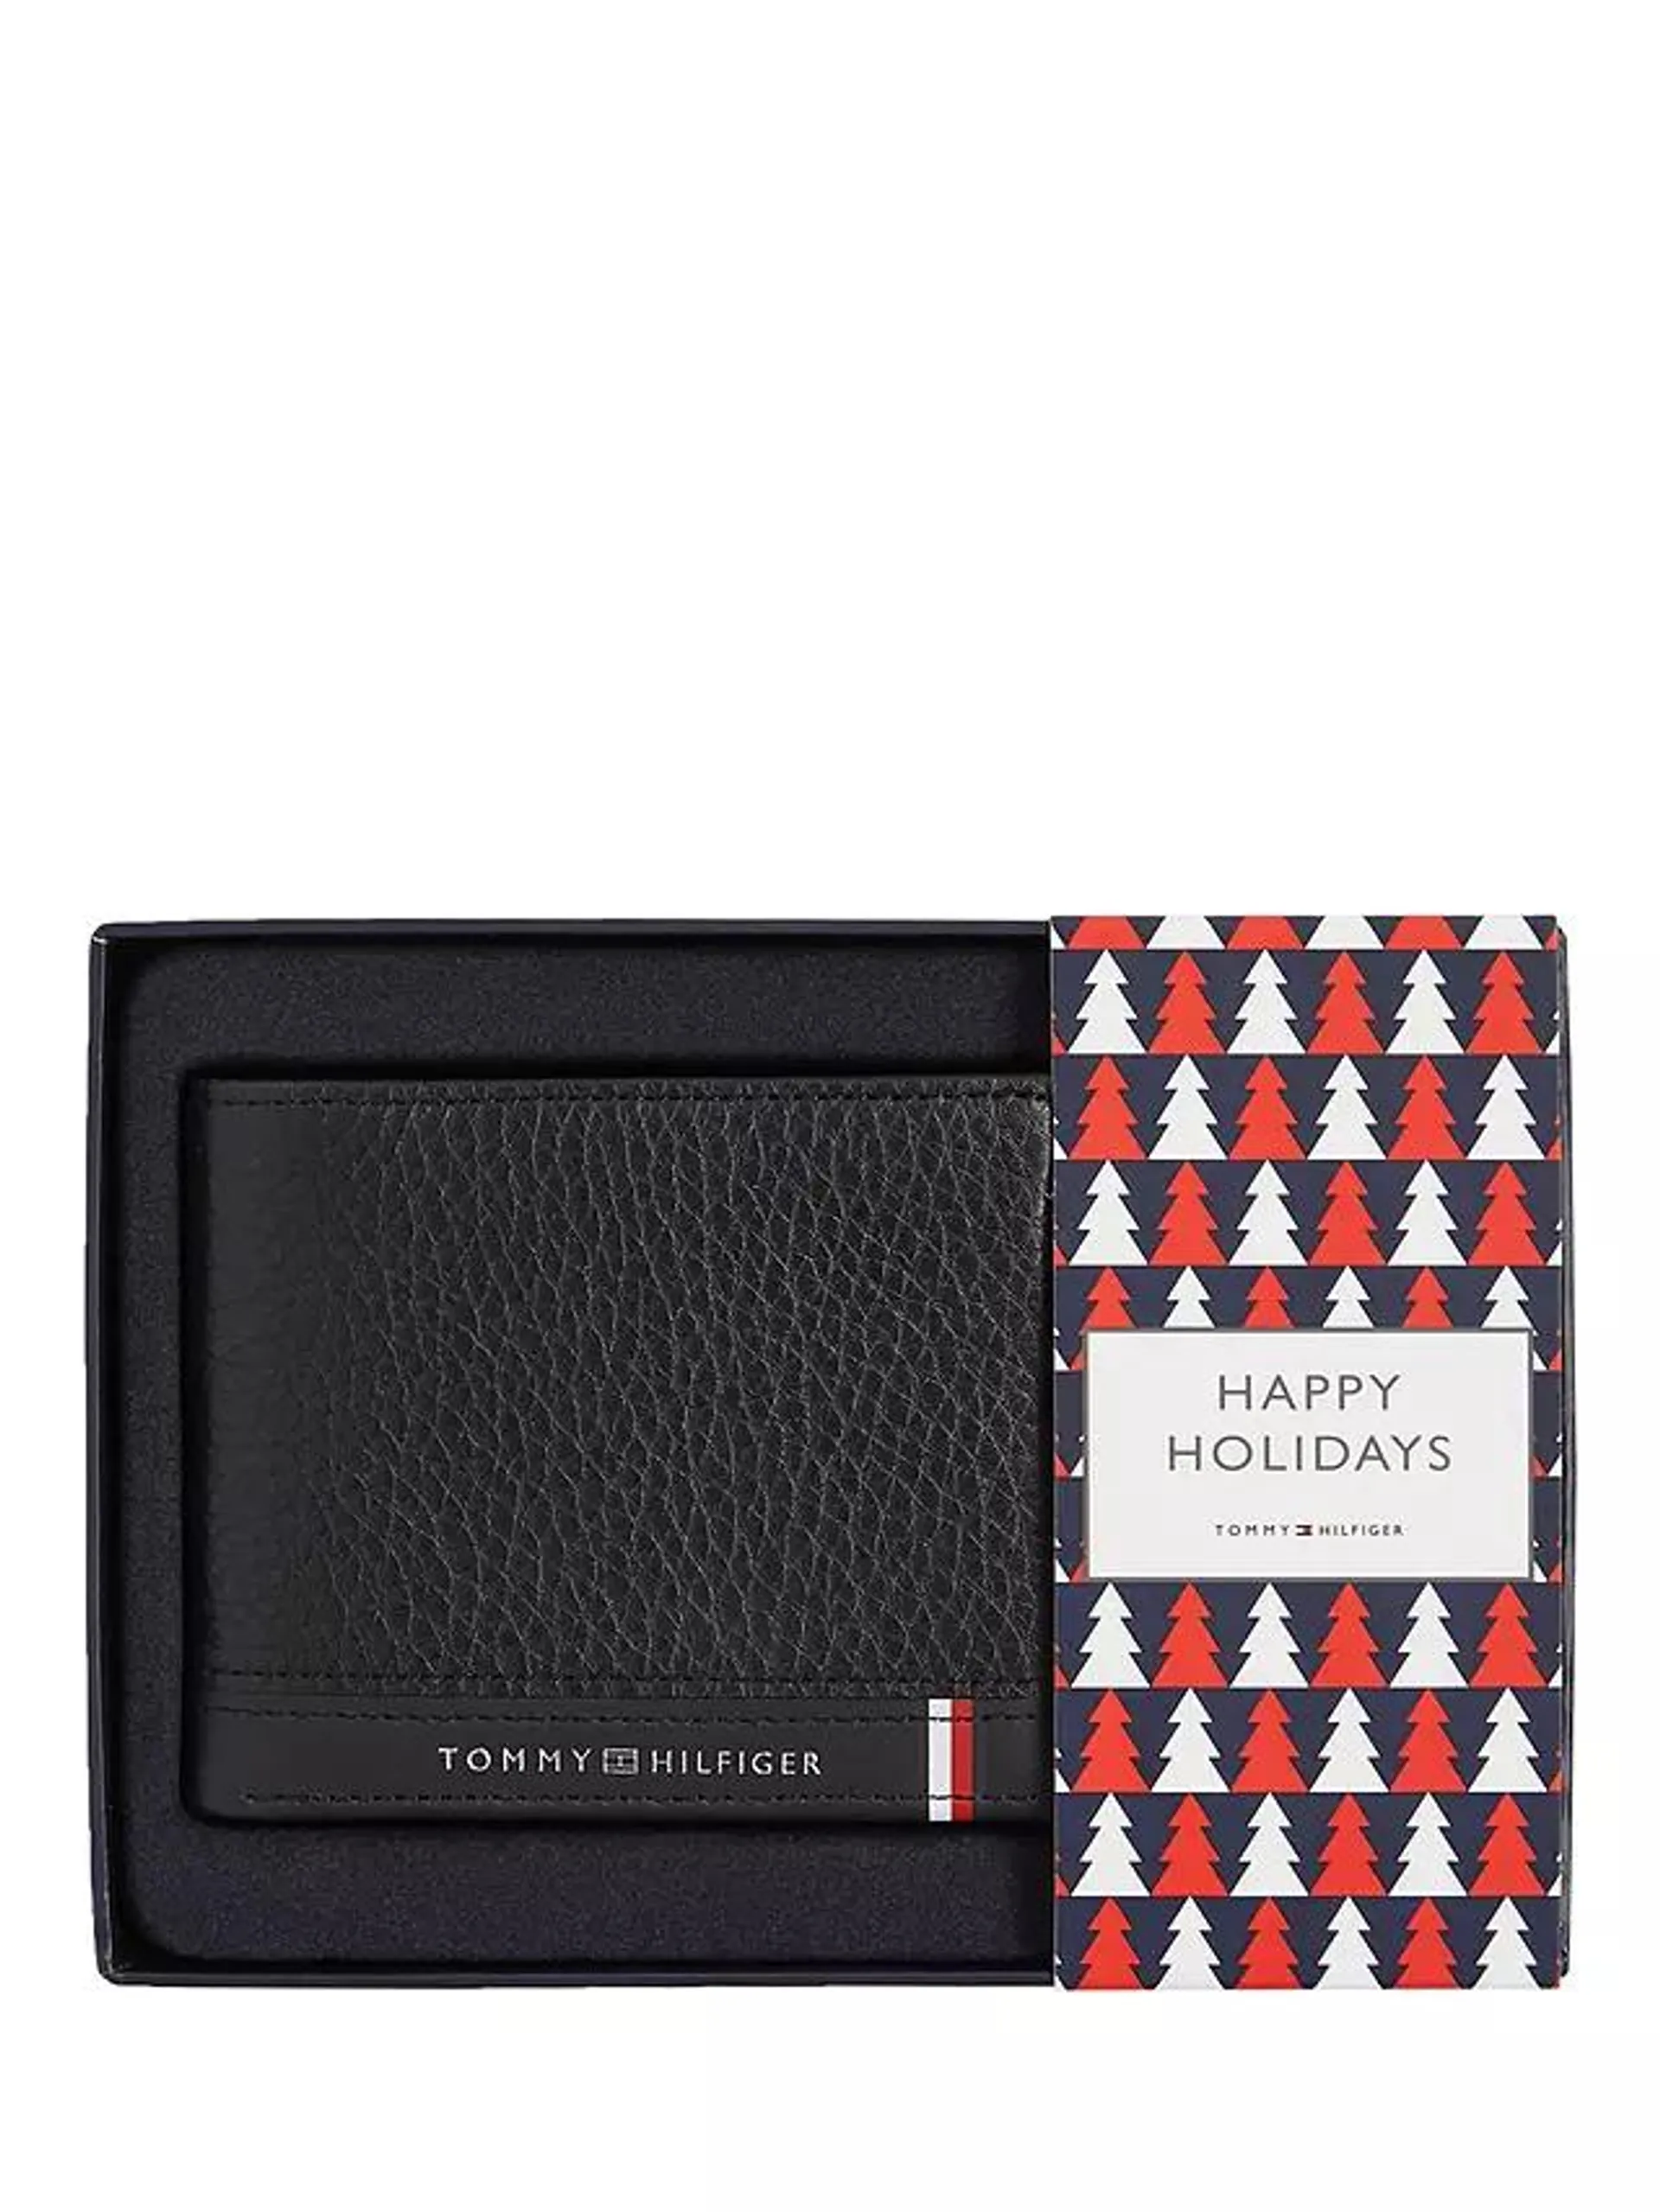 Tommy Hilfiger Mini Card Holder & Key Fob Christmas Gift Set